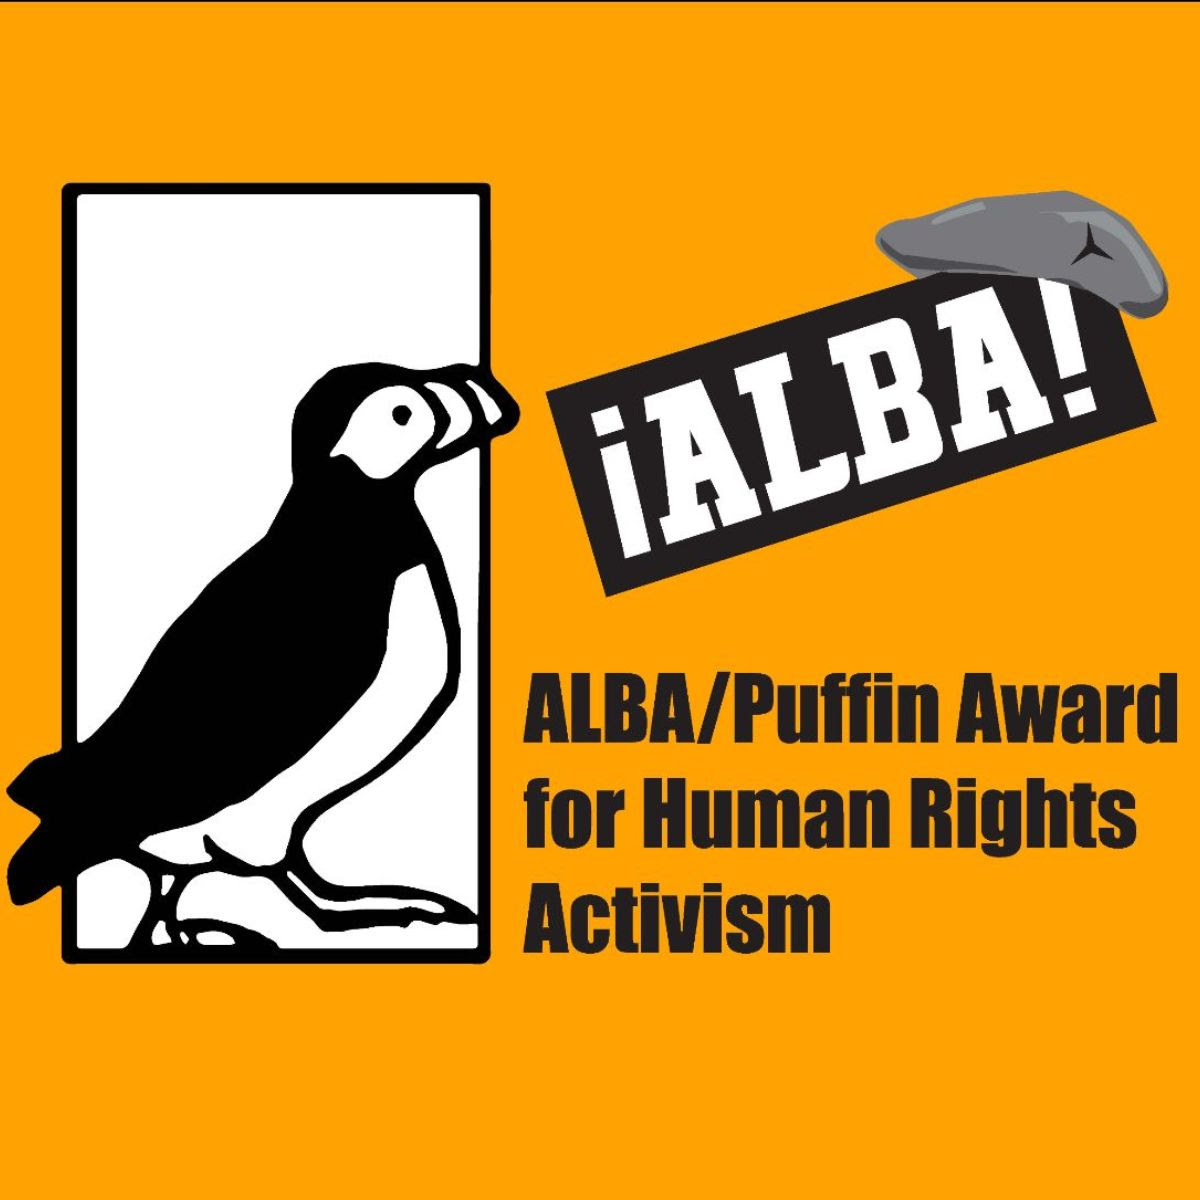 alba and puffin logo